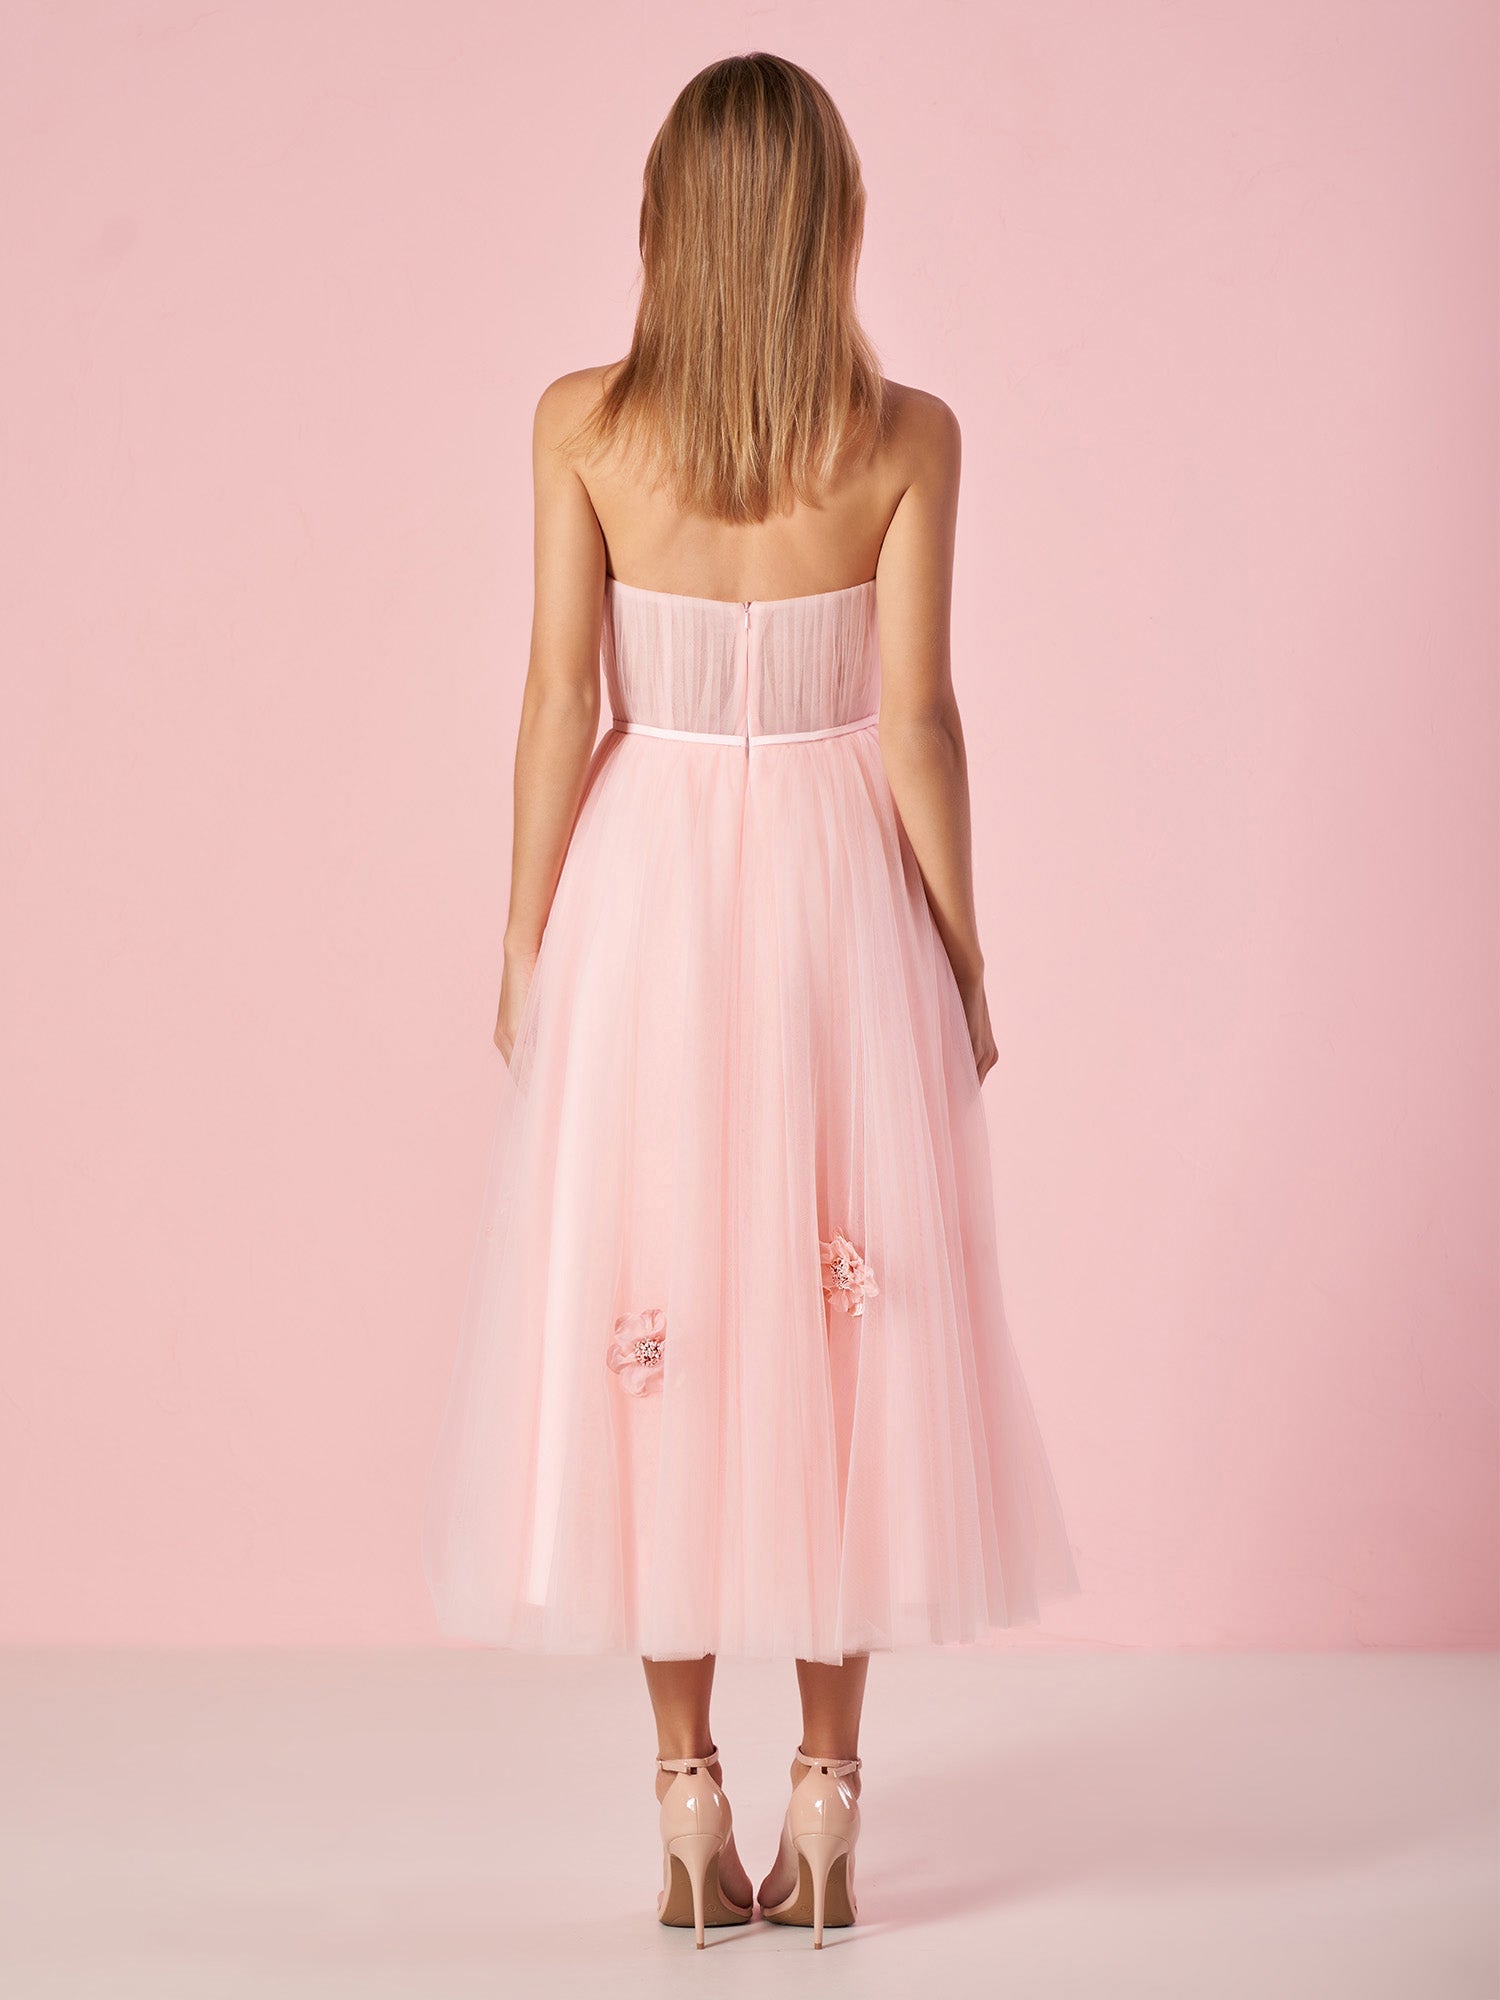 Pandora |Light Pink Princess Strapless Prom Dress with Flowers